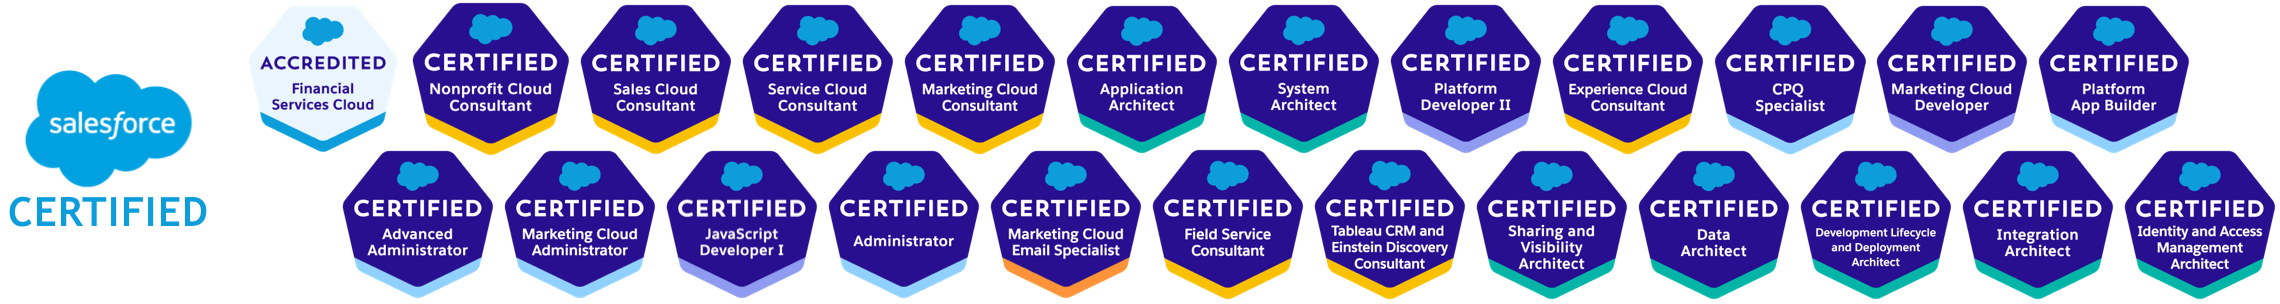 salesforce certifications